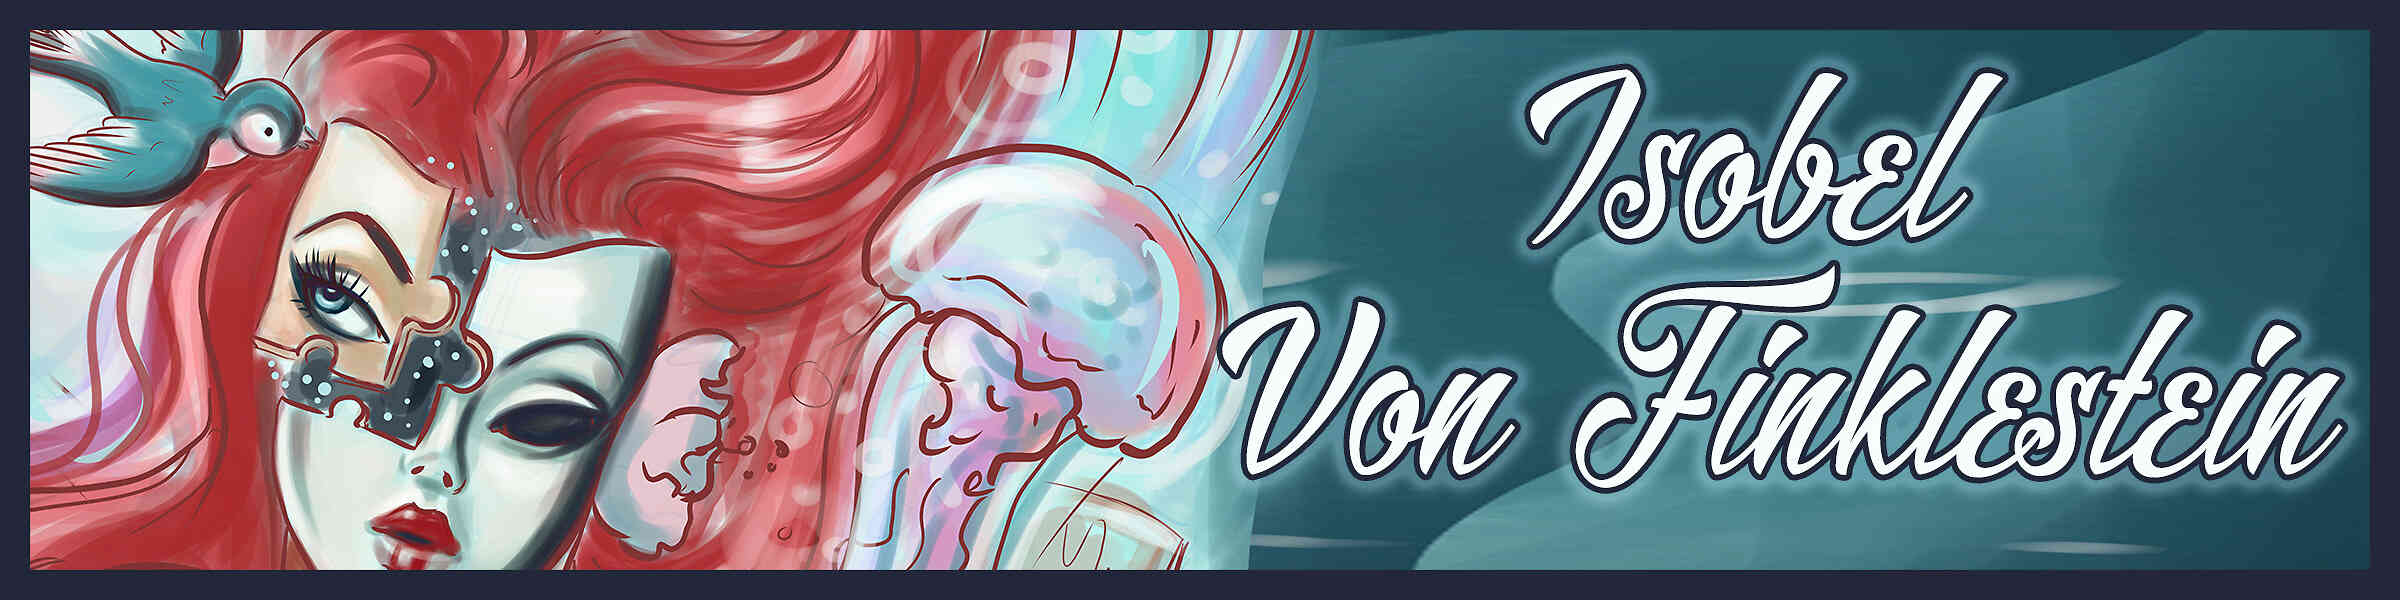 Skull and Crossbones Fishnet Pantyhose – Violet Vixen